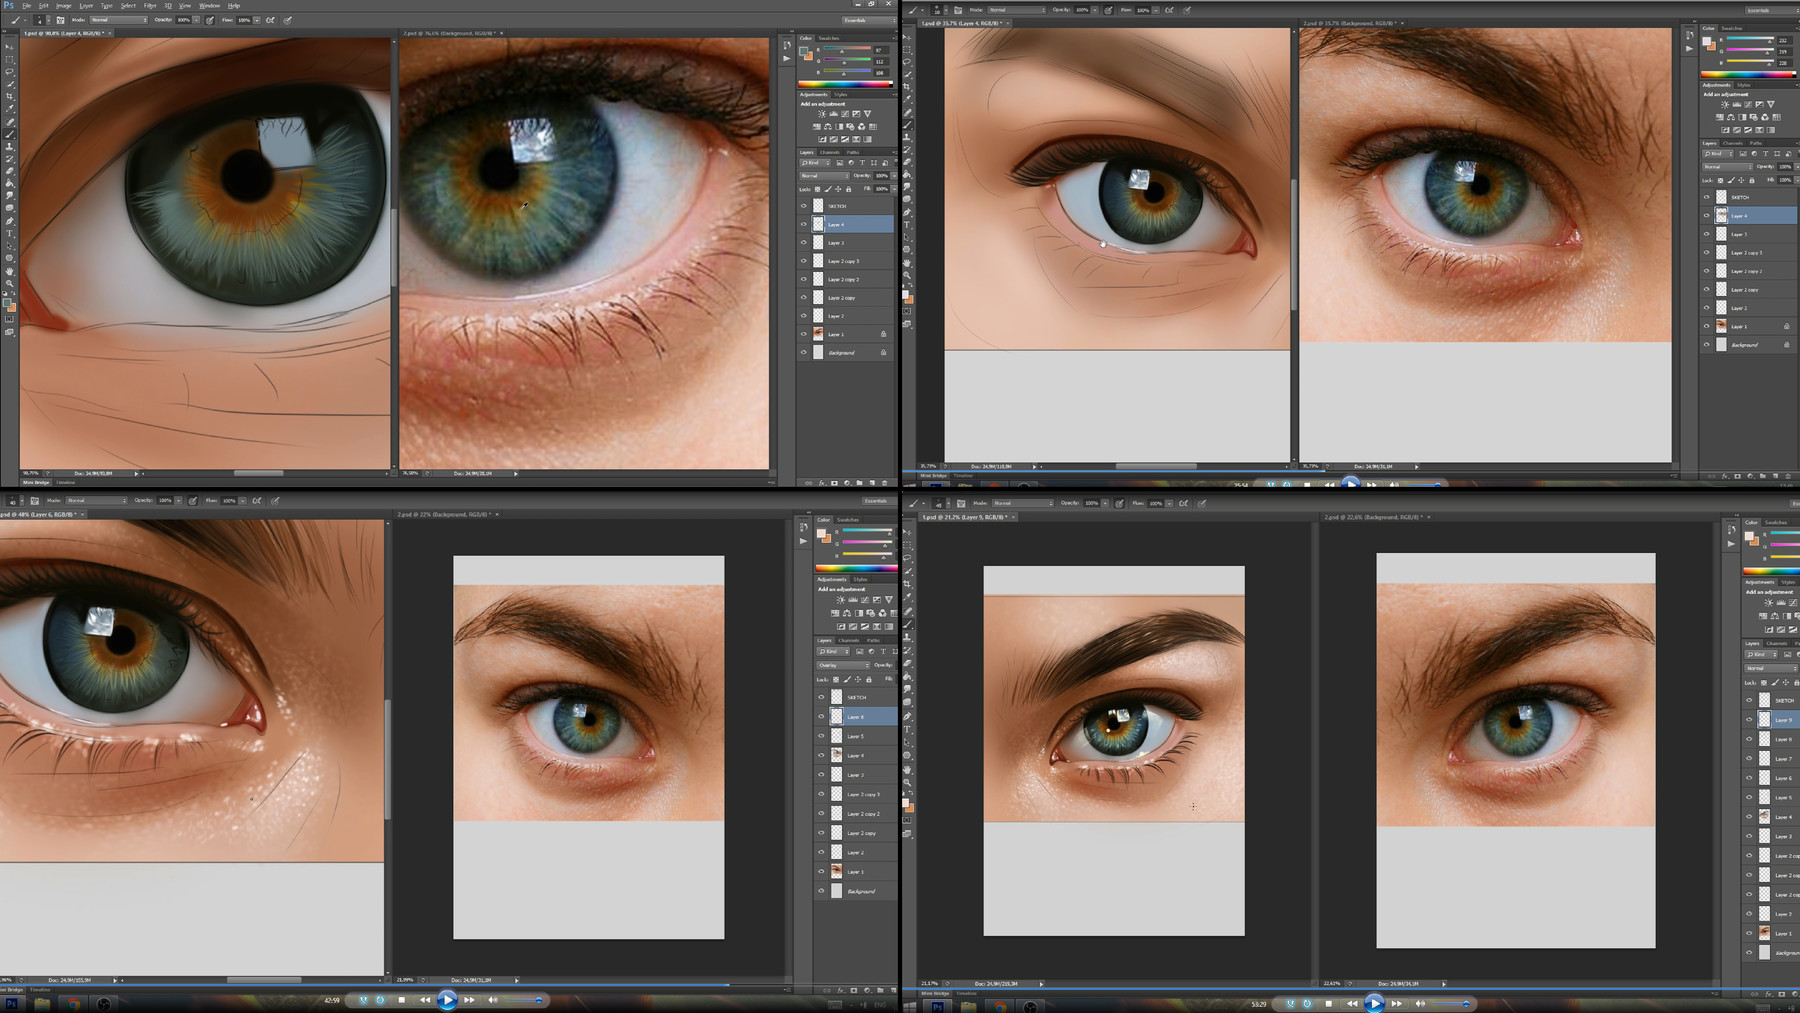 ArtStation - Eye Painting In Photoshop - Video Tutorial | Tutorials